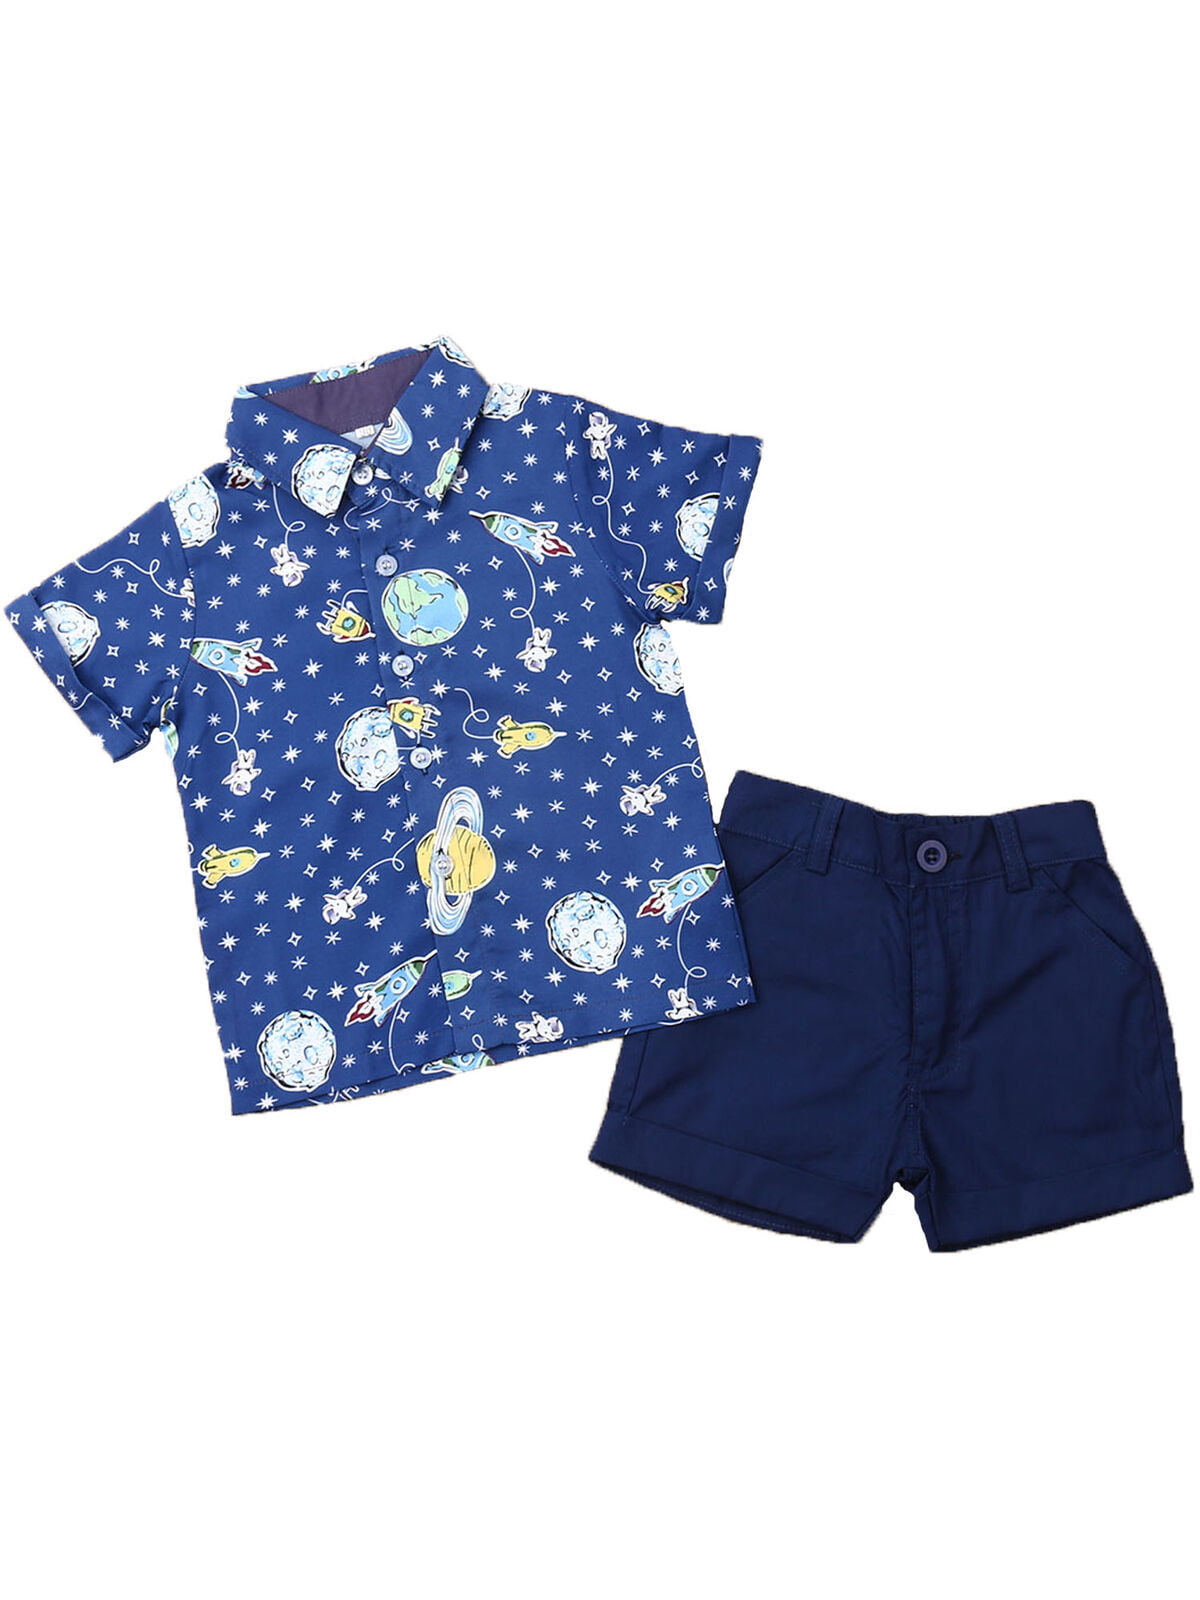 Kids Baby Boy Rocket Gentleman Clothes Shirt Tops Shorts Pants Formal Outfit 